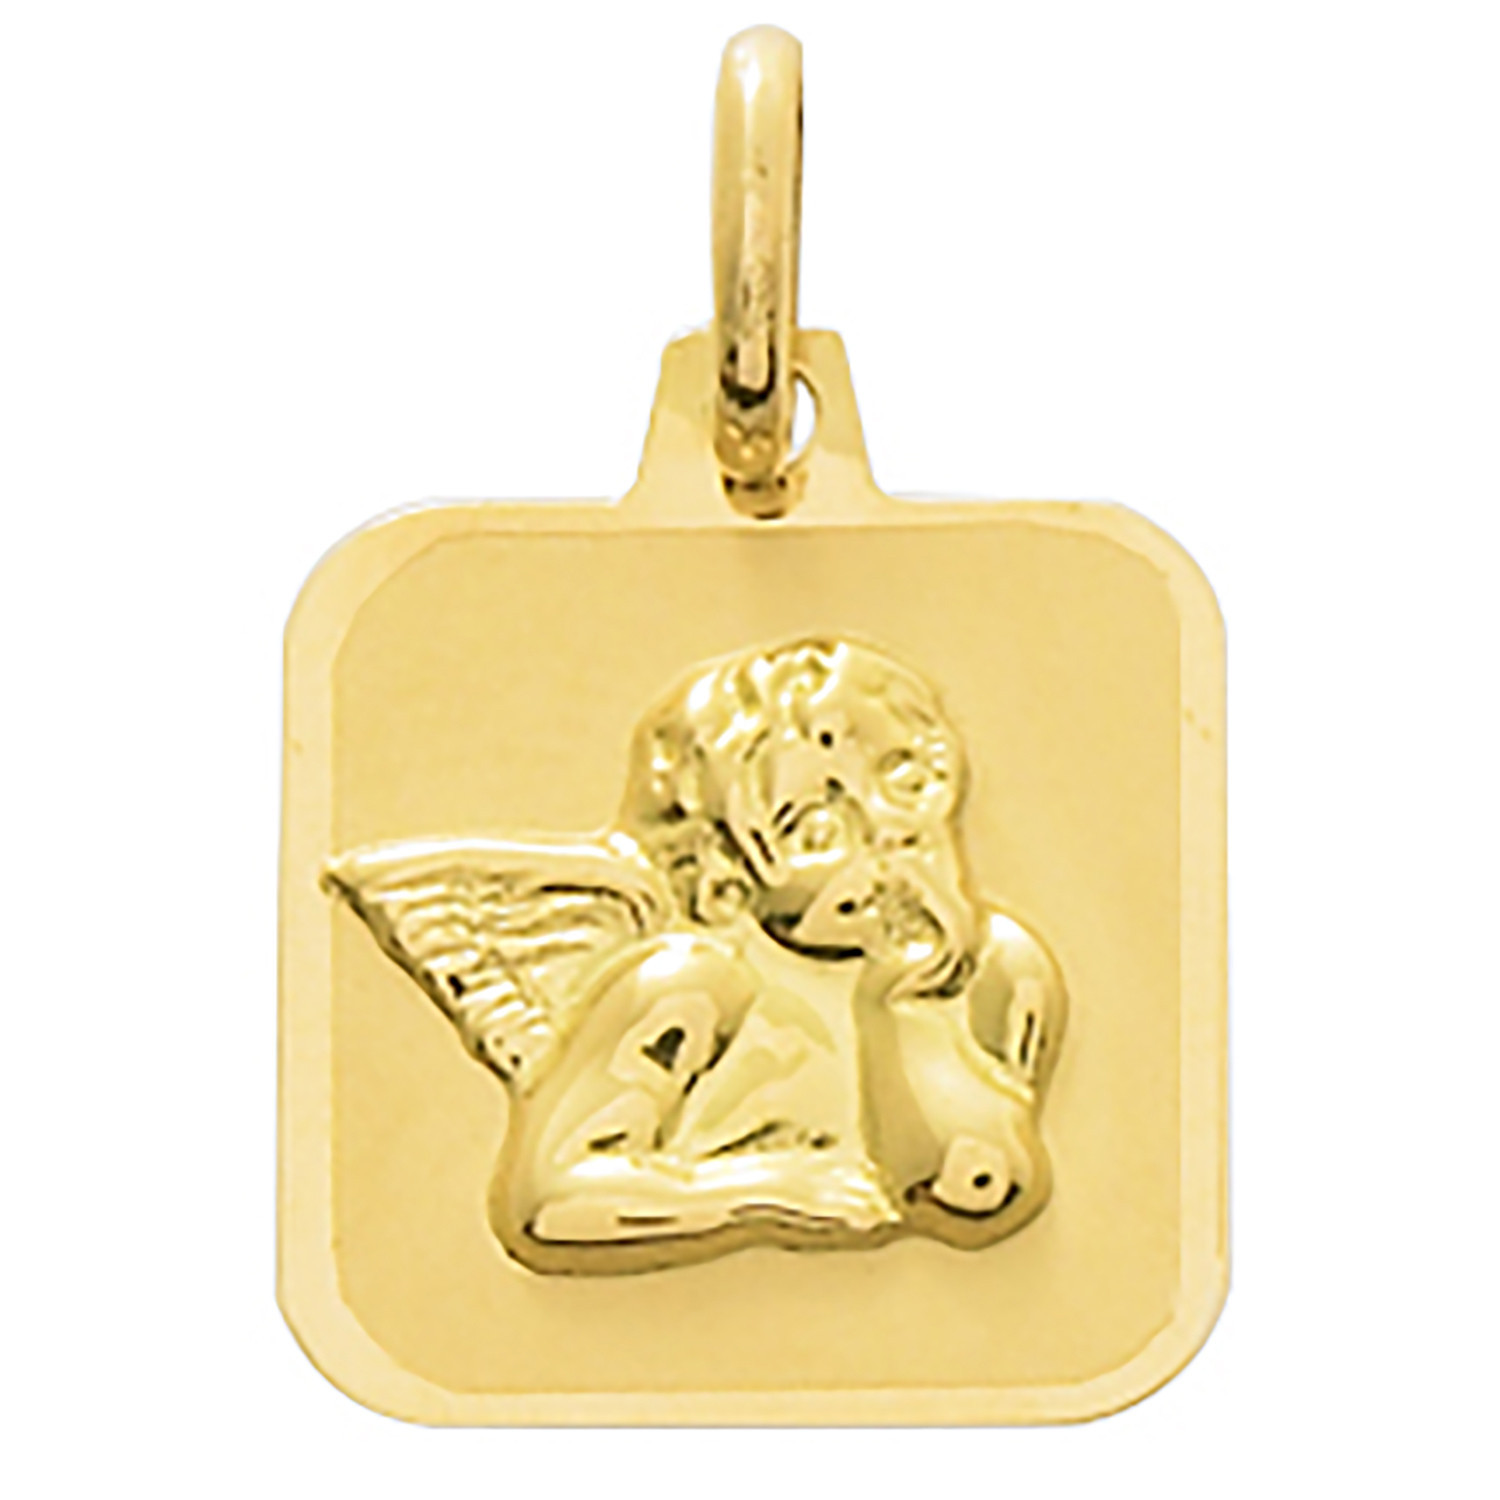 Médaille Brillaxis carrée ange or jaune 375